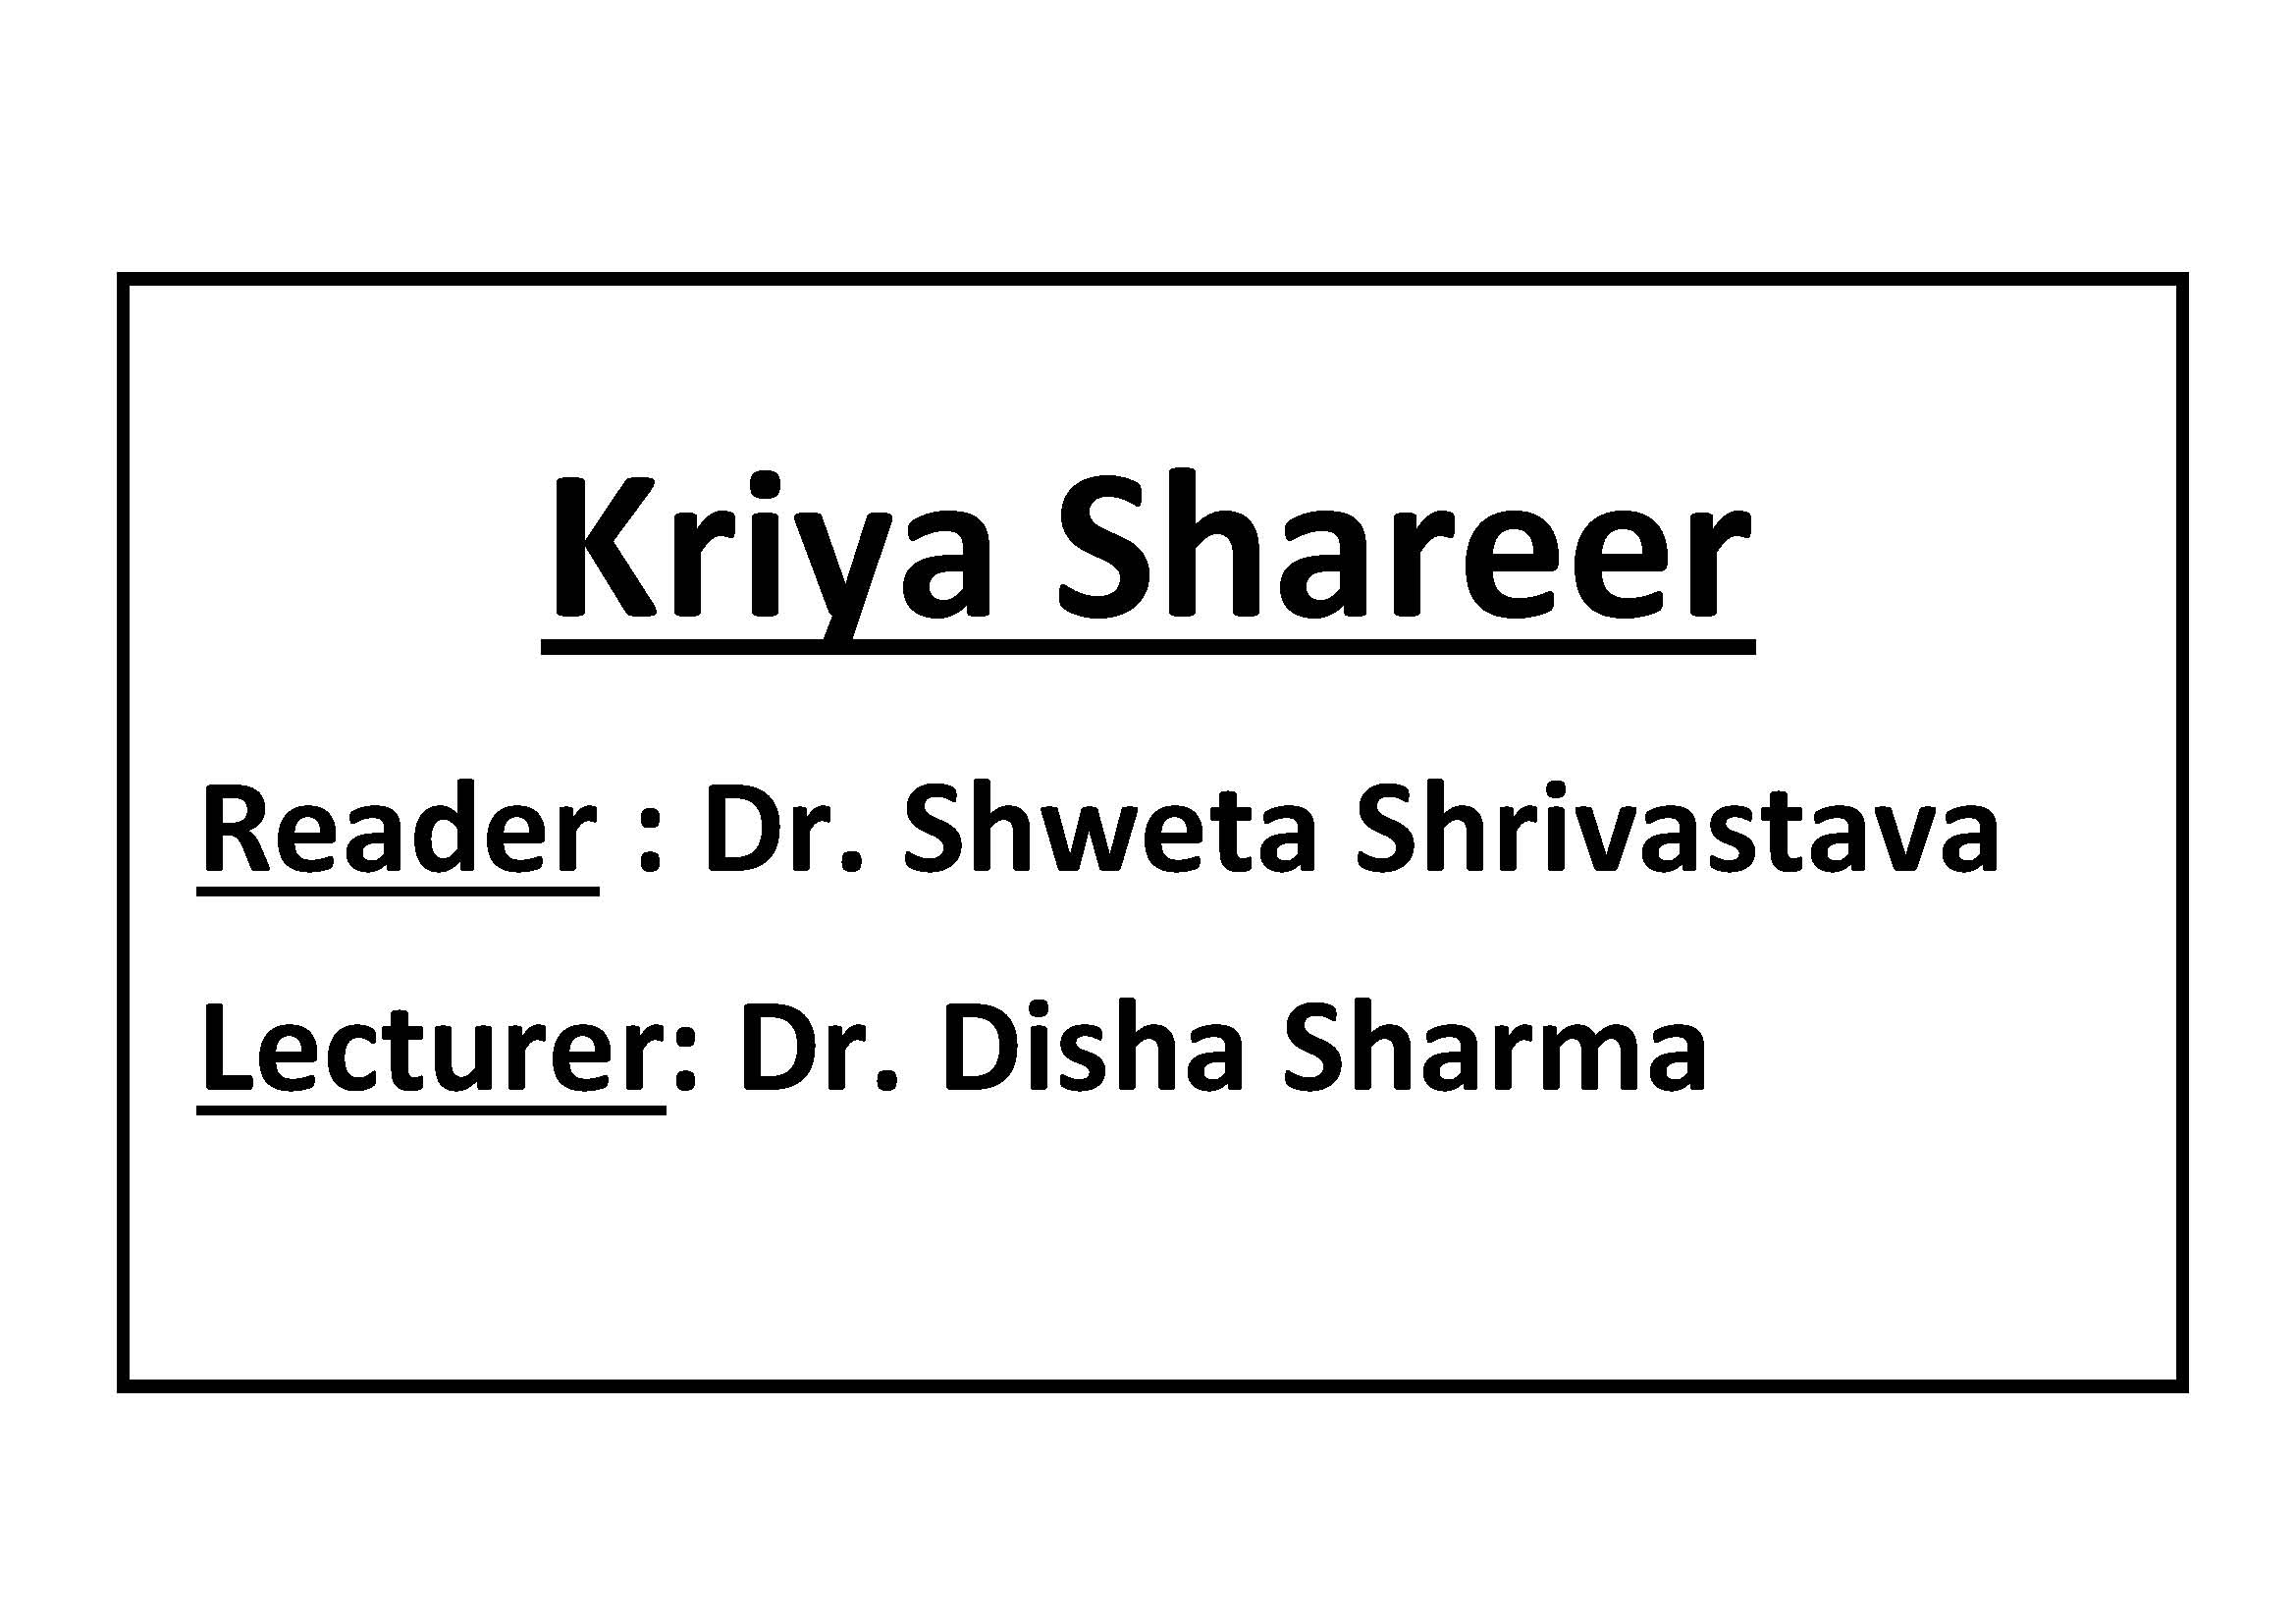 Kriya Shareera